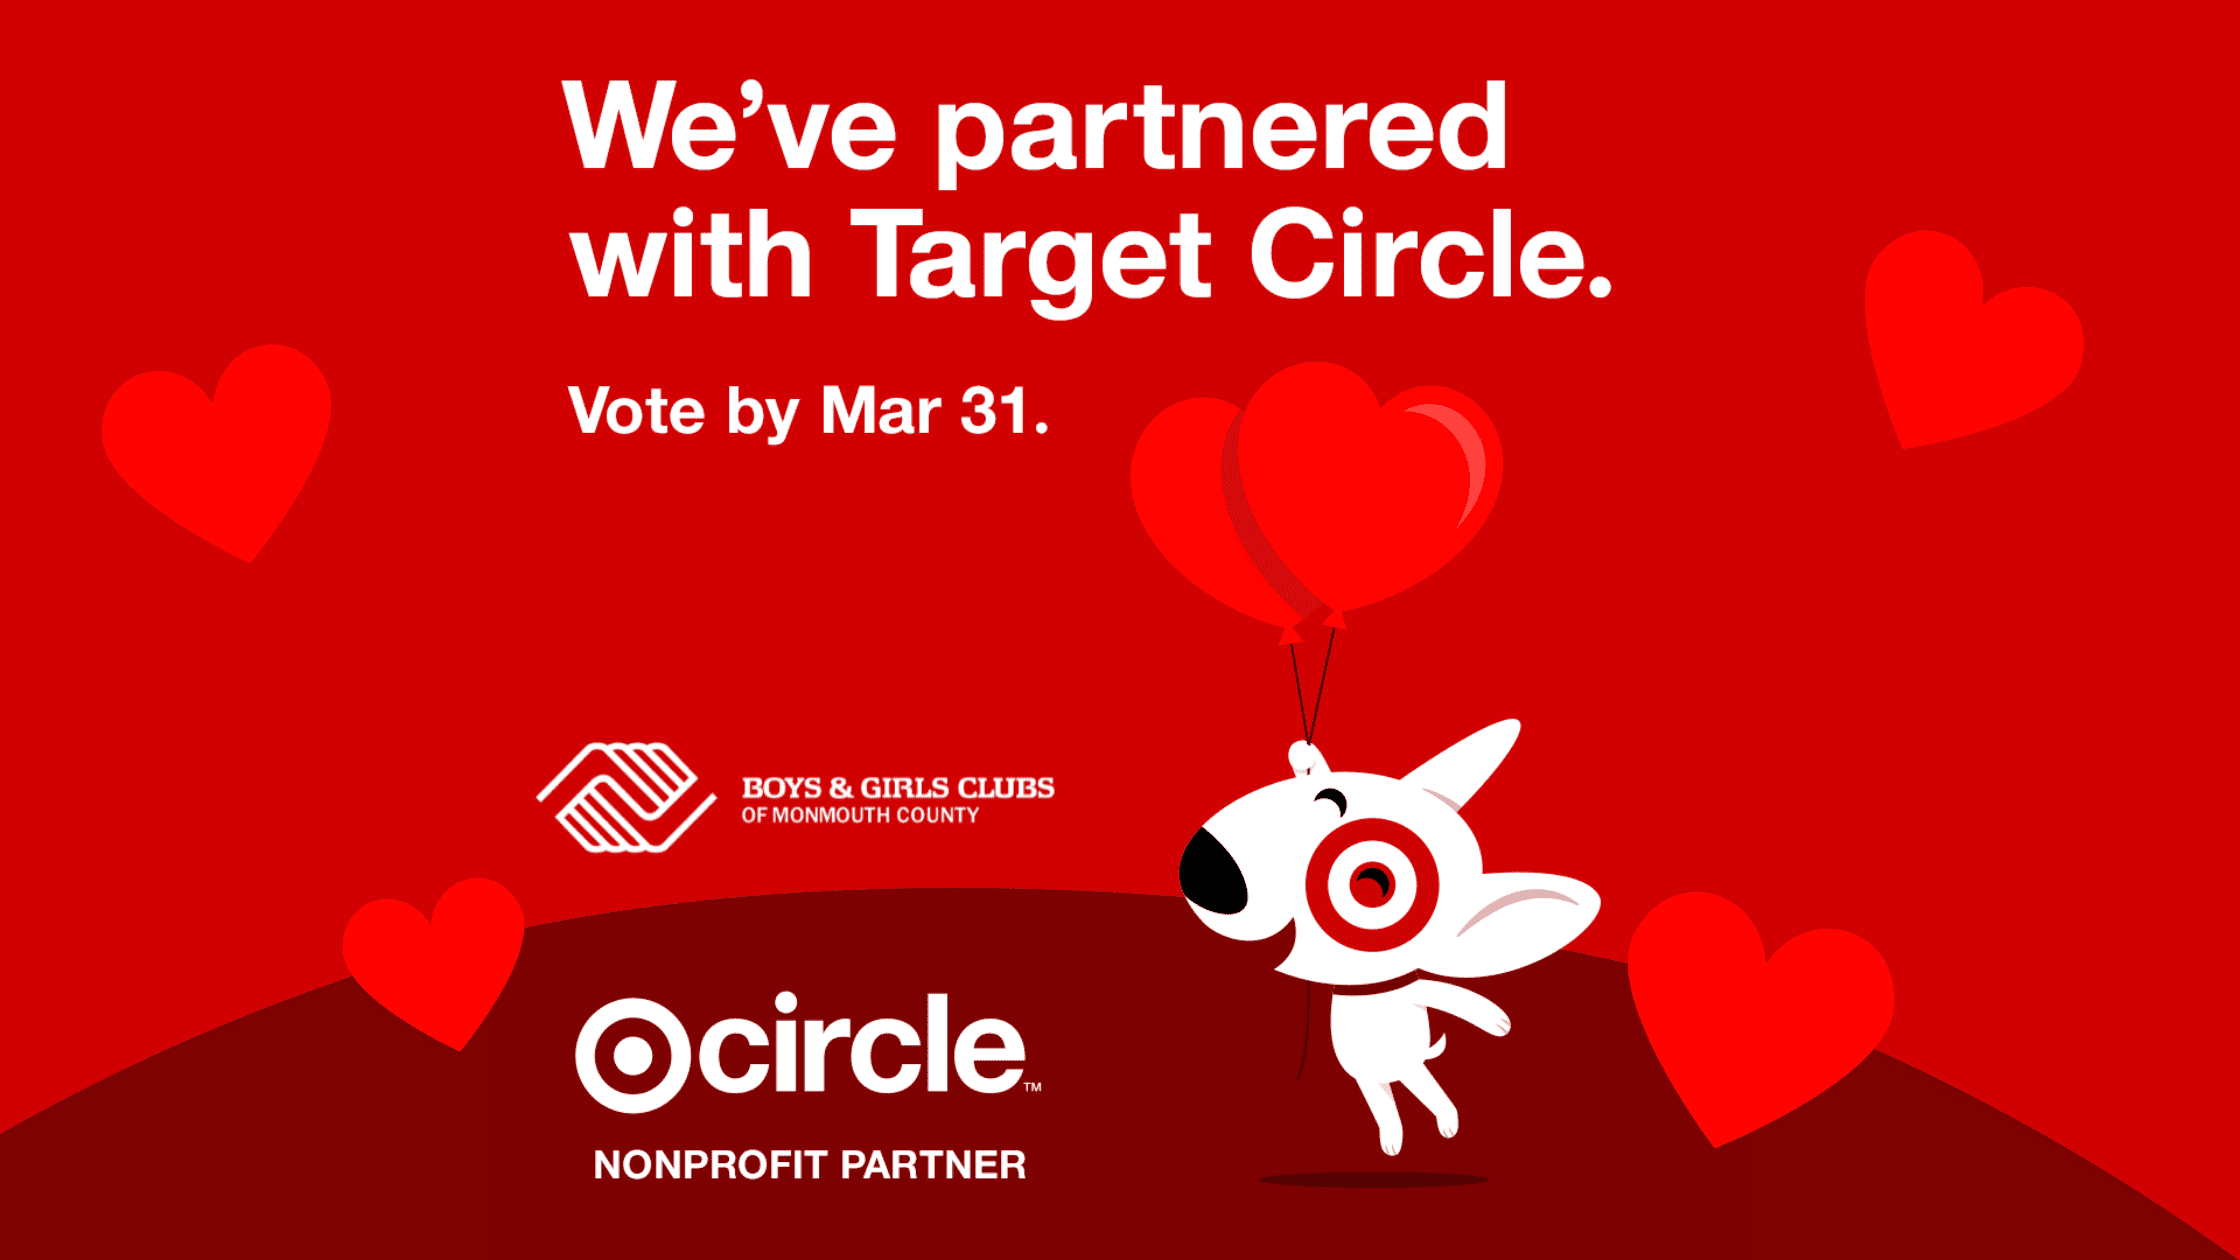 BGCM has partnered with Target Circle